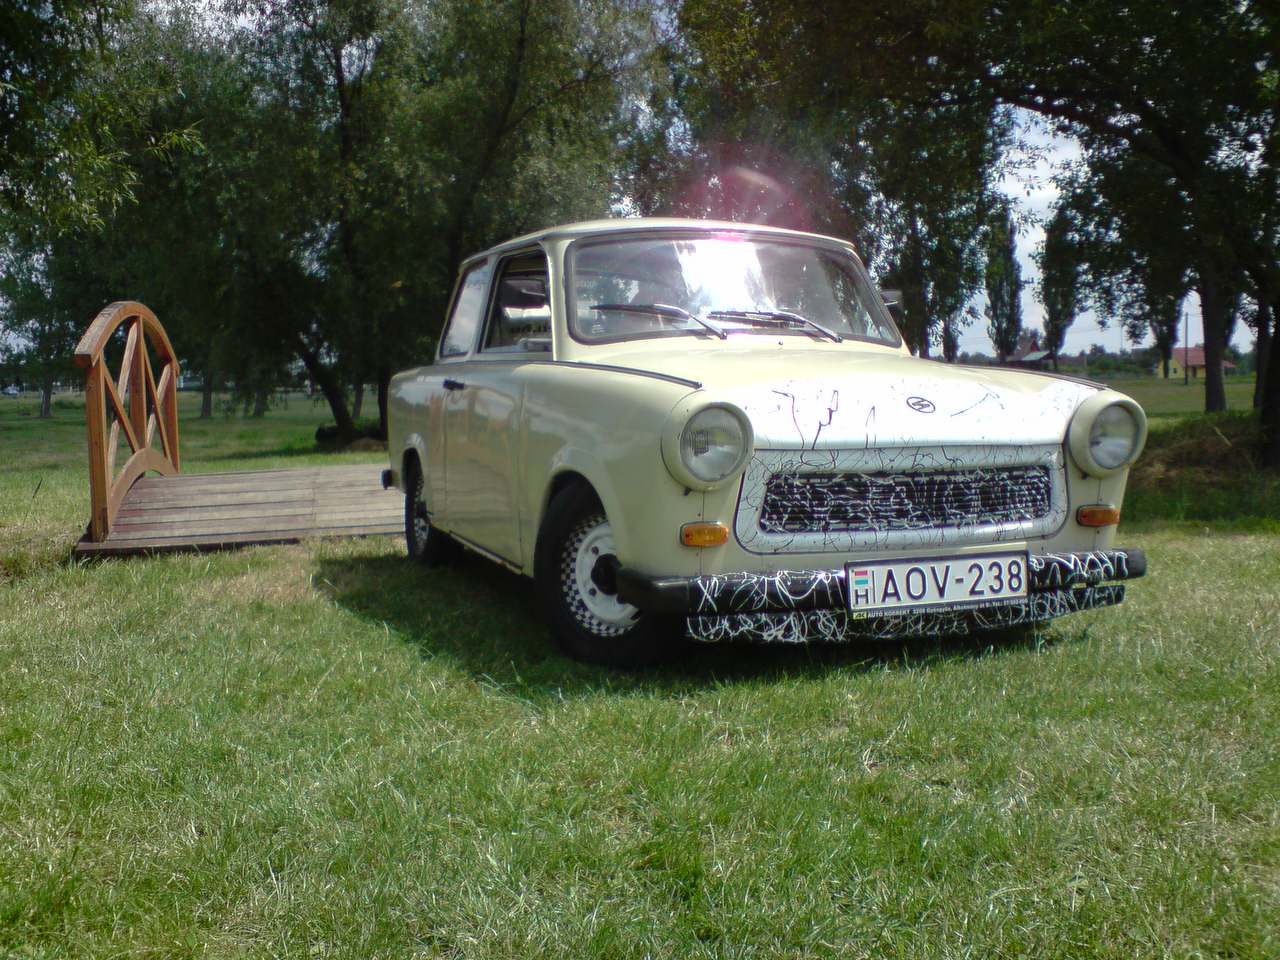 Skoda Felicia& trabant 601